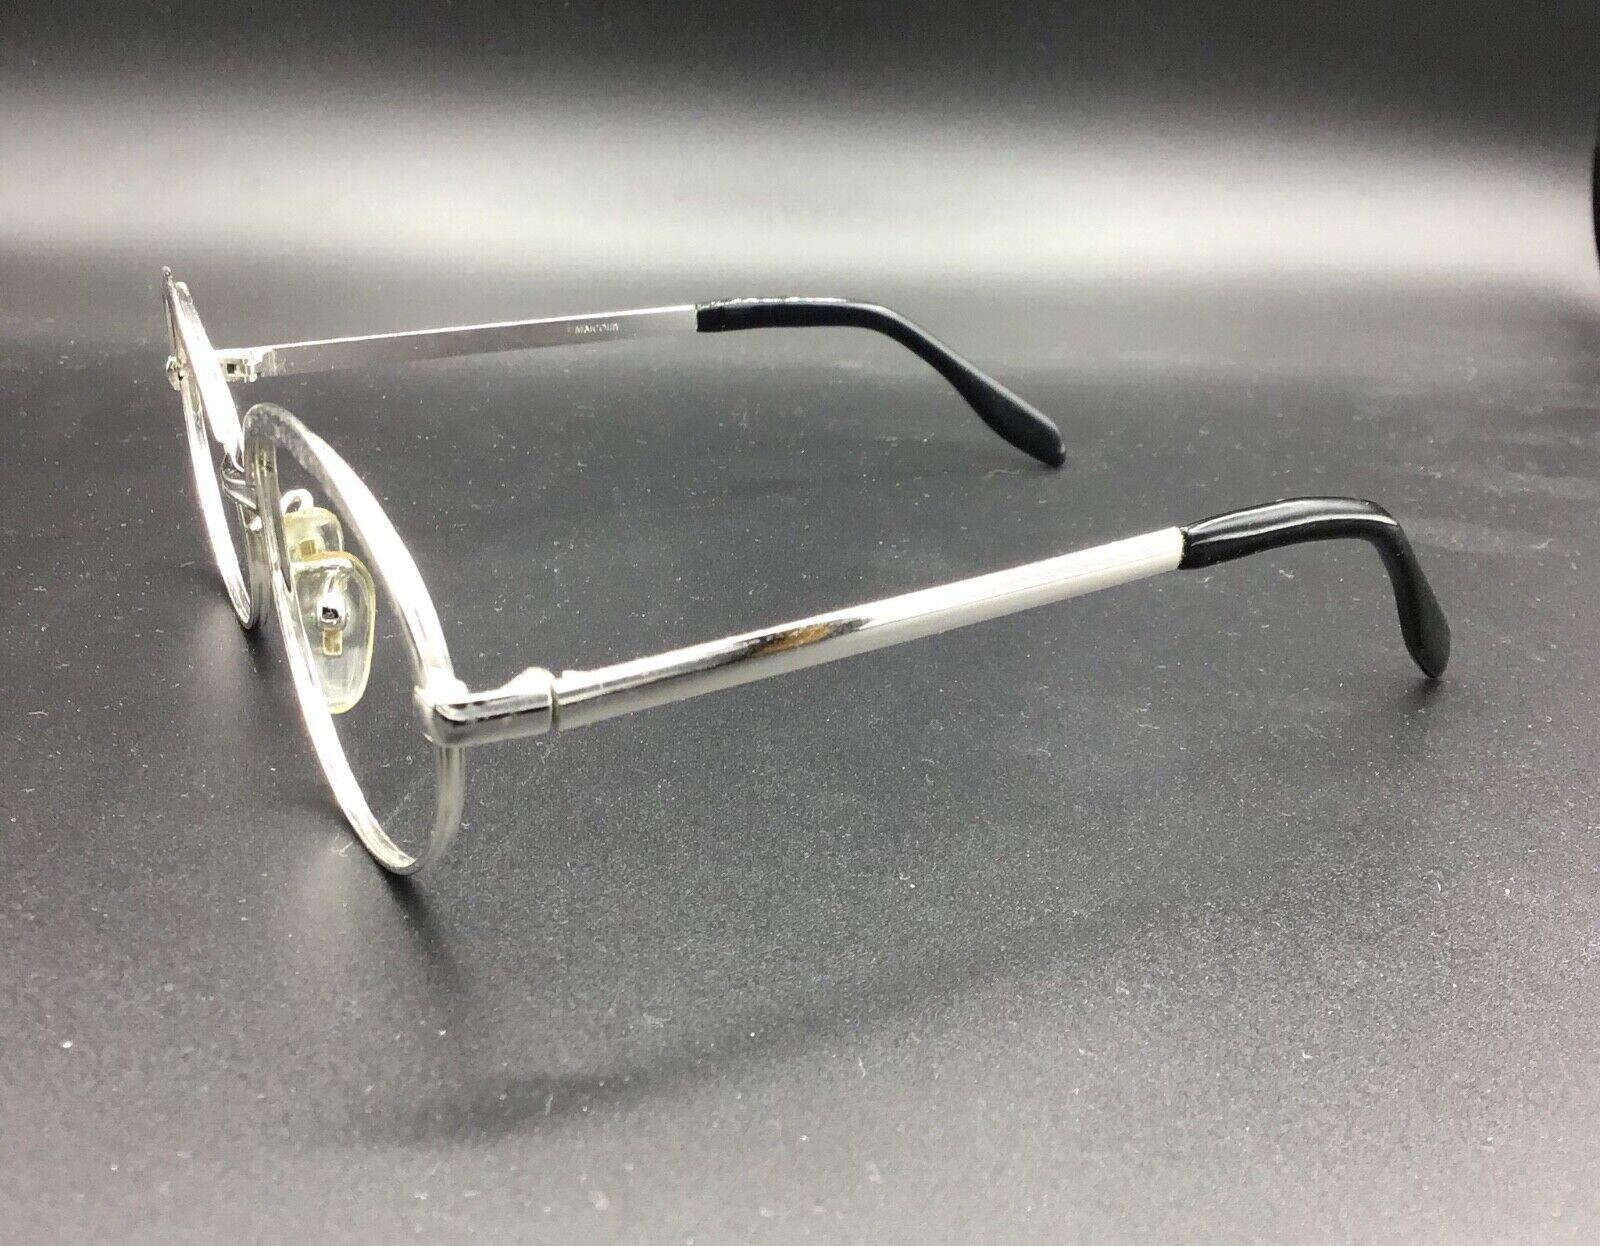 Marcolin occhiale vintage Eyewear fram Italy model 722 metal oval